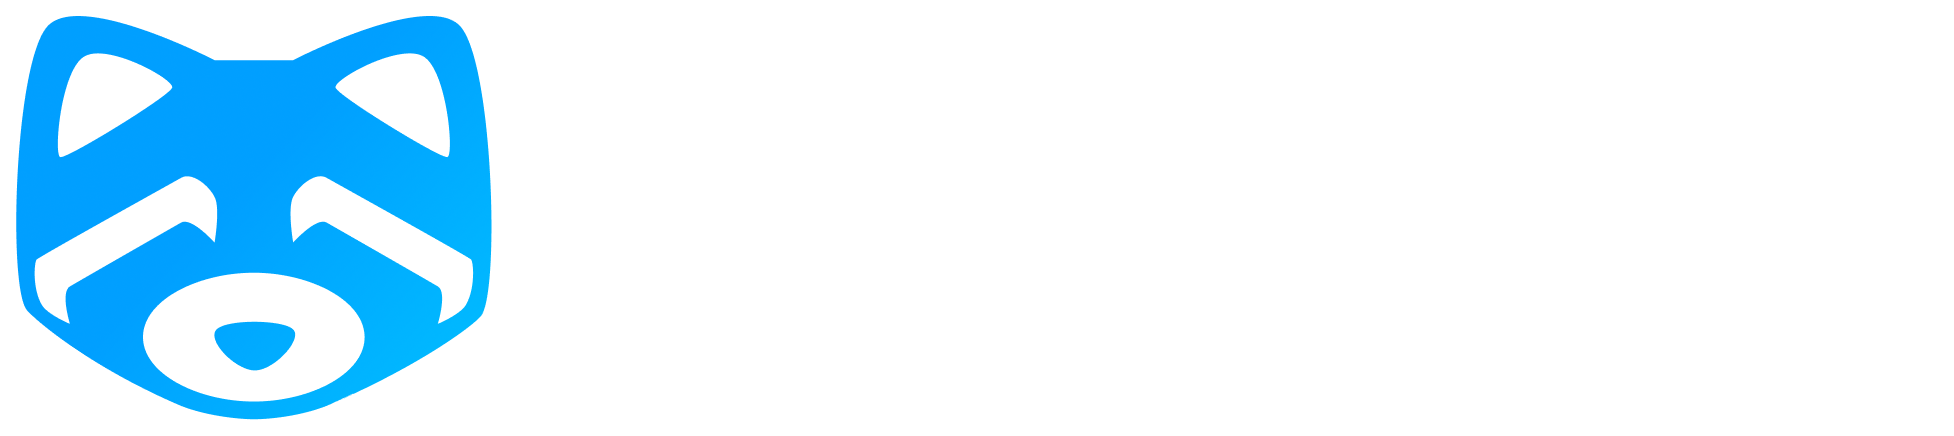 Shakepay Blog